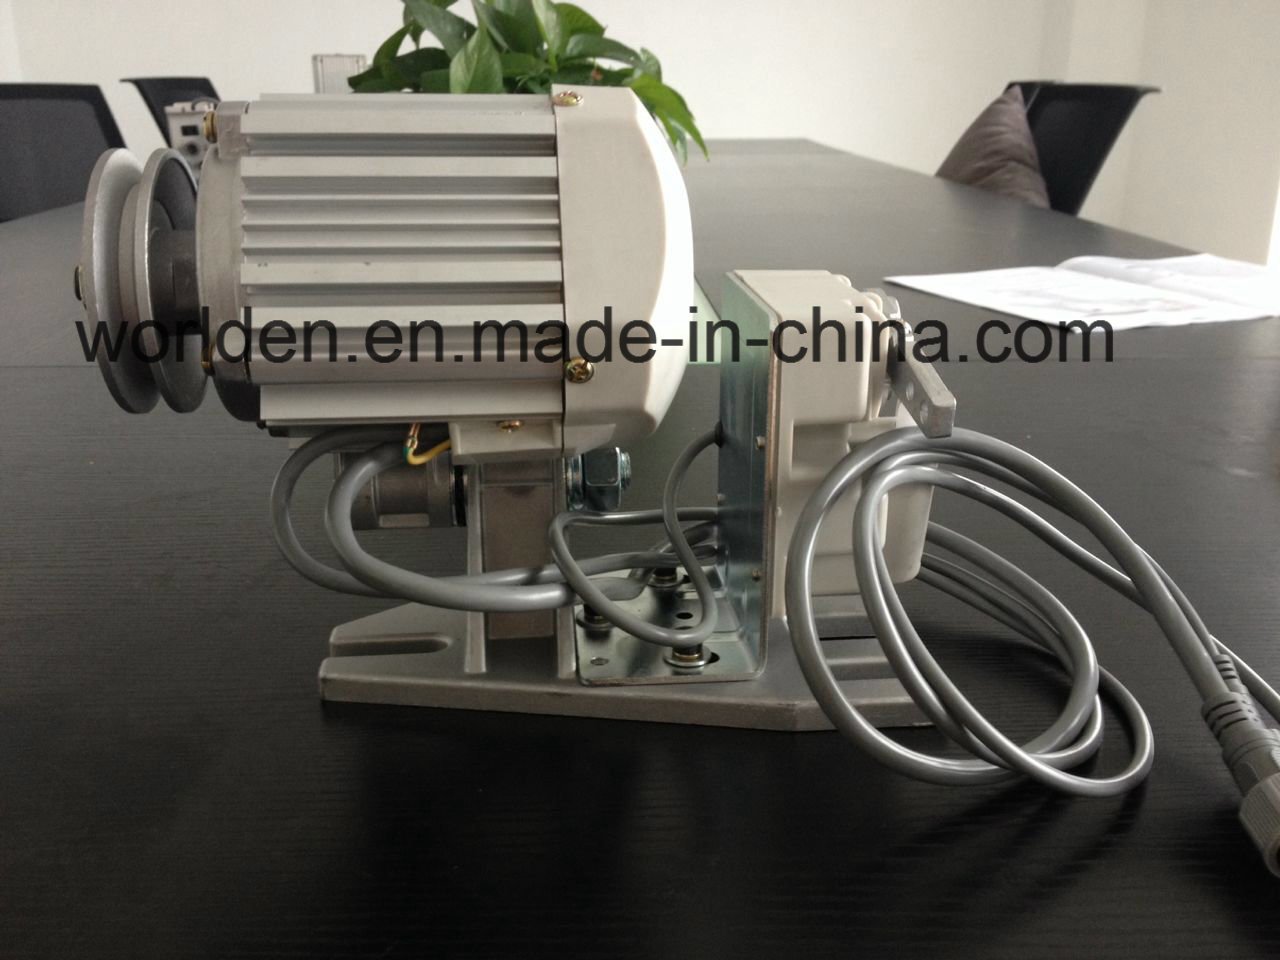 Wd-990jm Split Type Energy Saving Motor for Industrial Sewing Machine